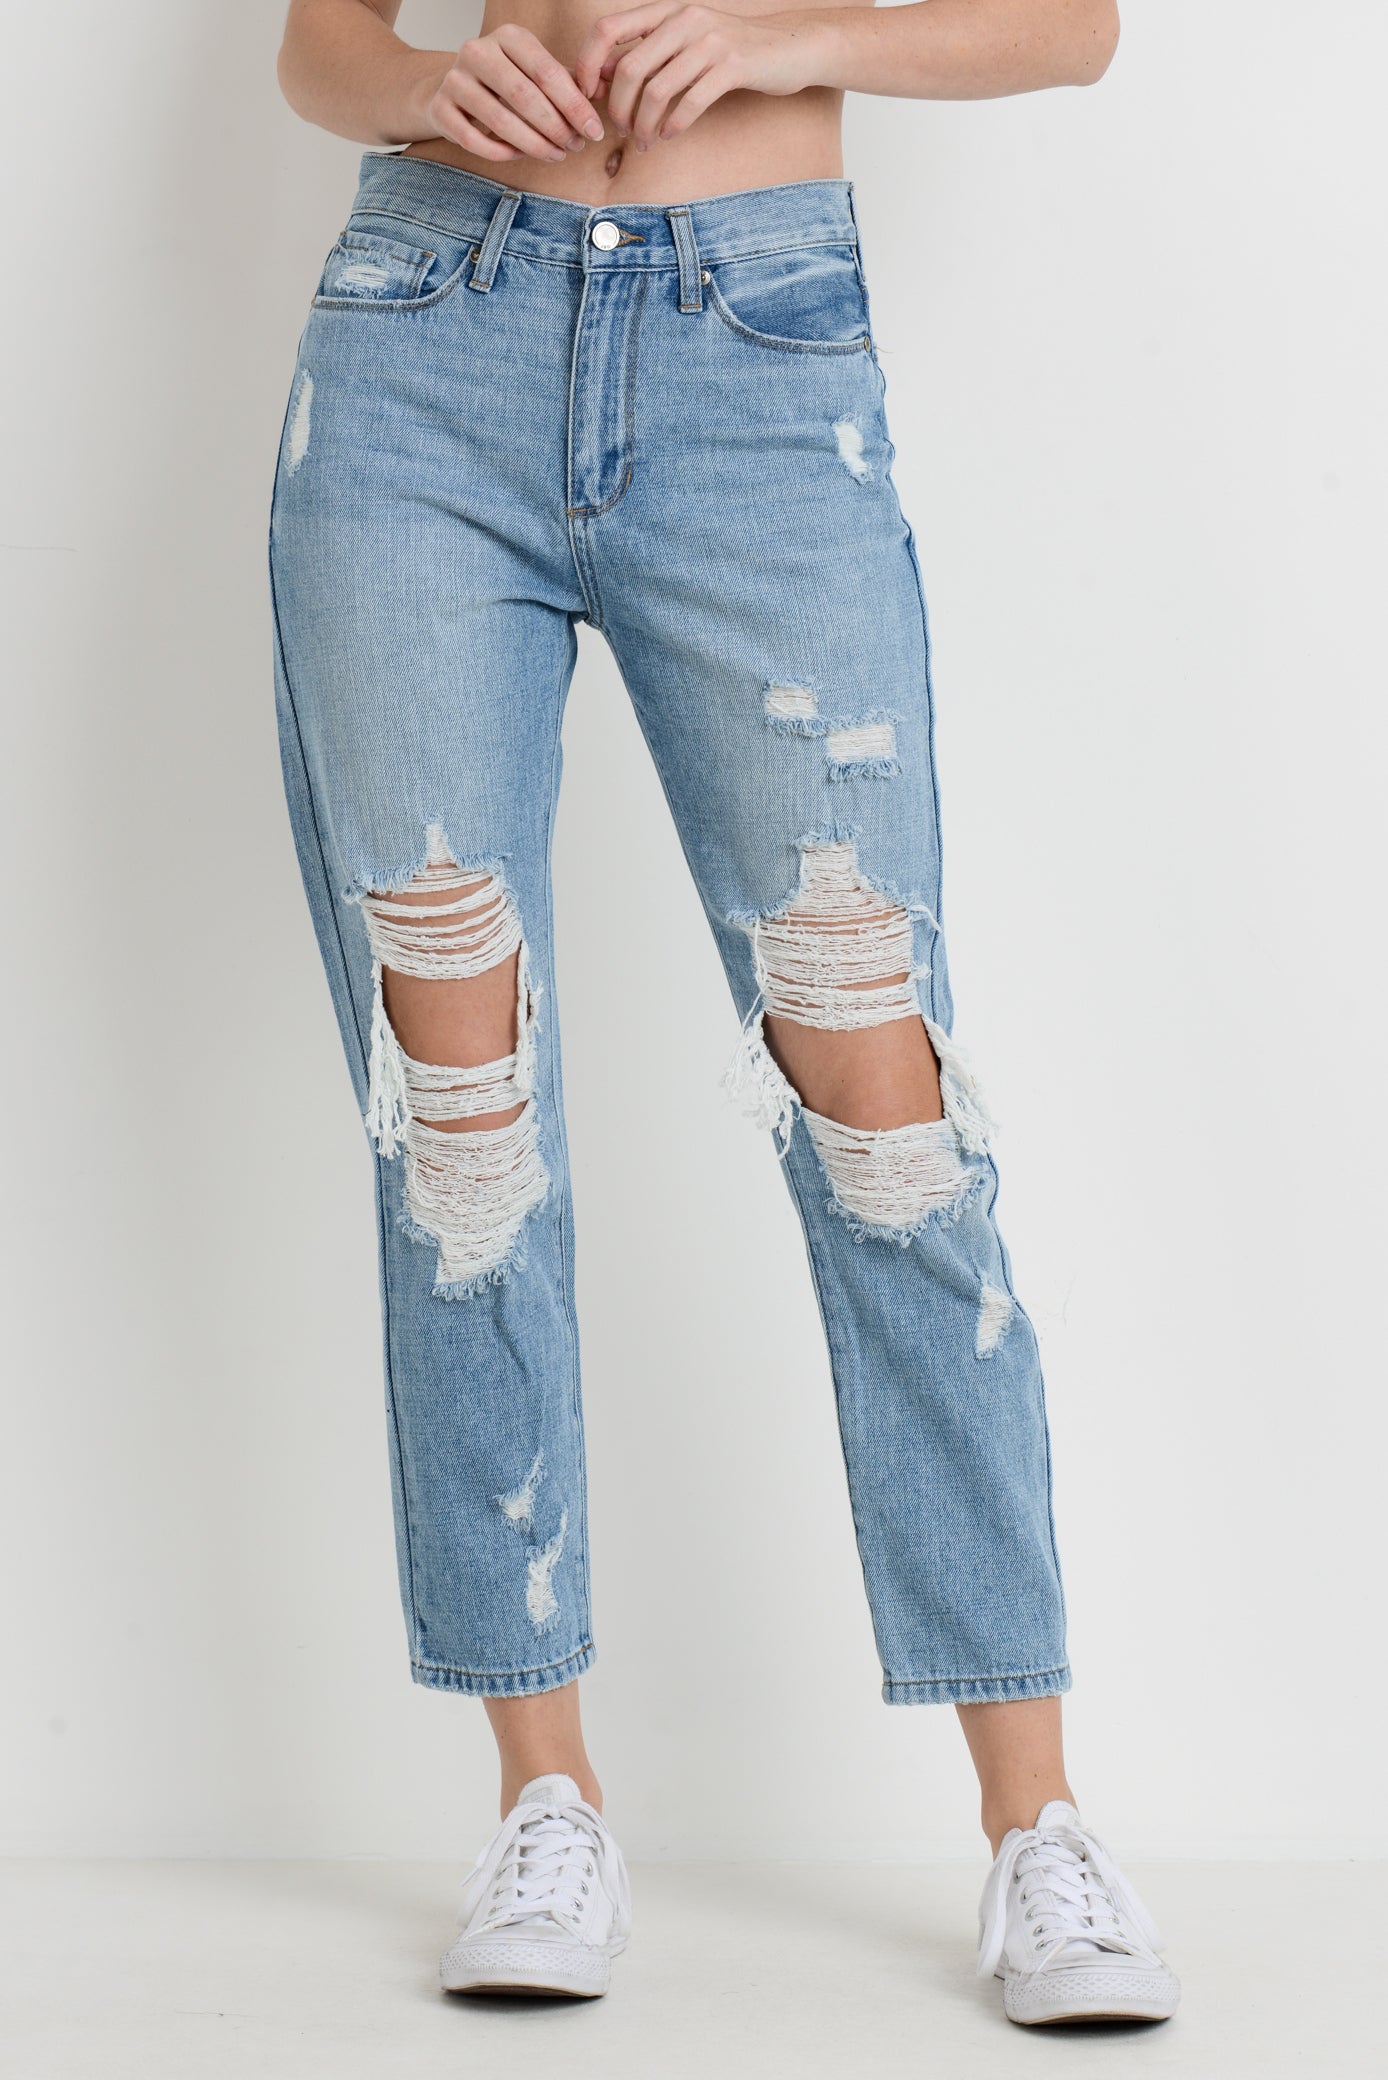 levi's modern bootcut jeans